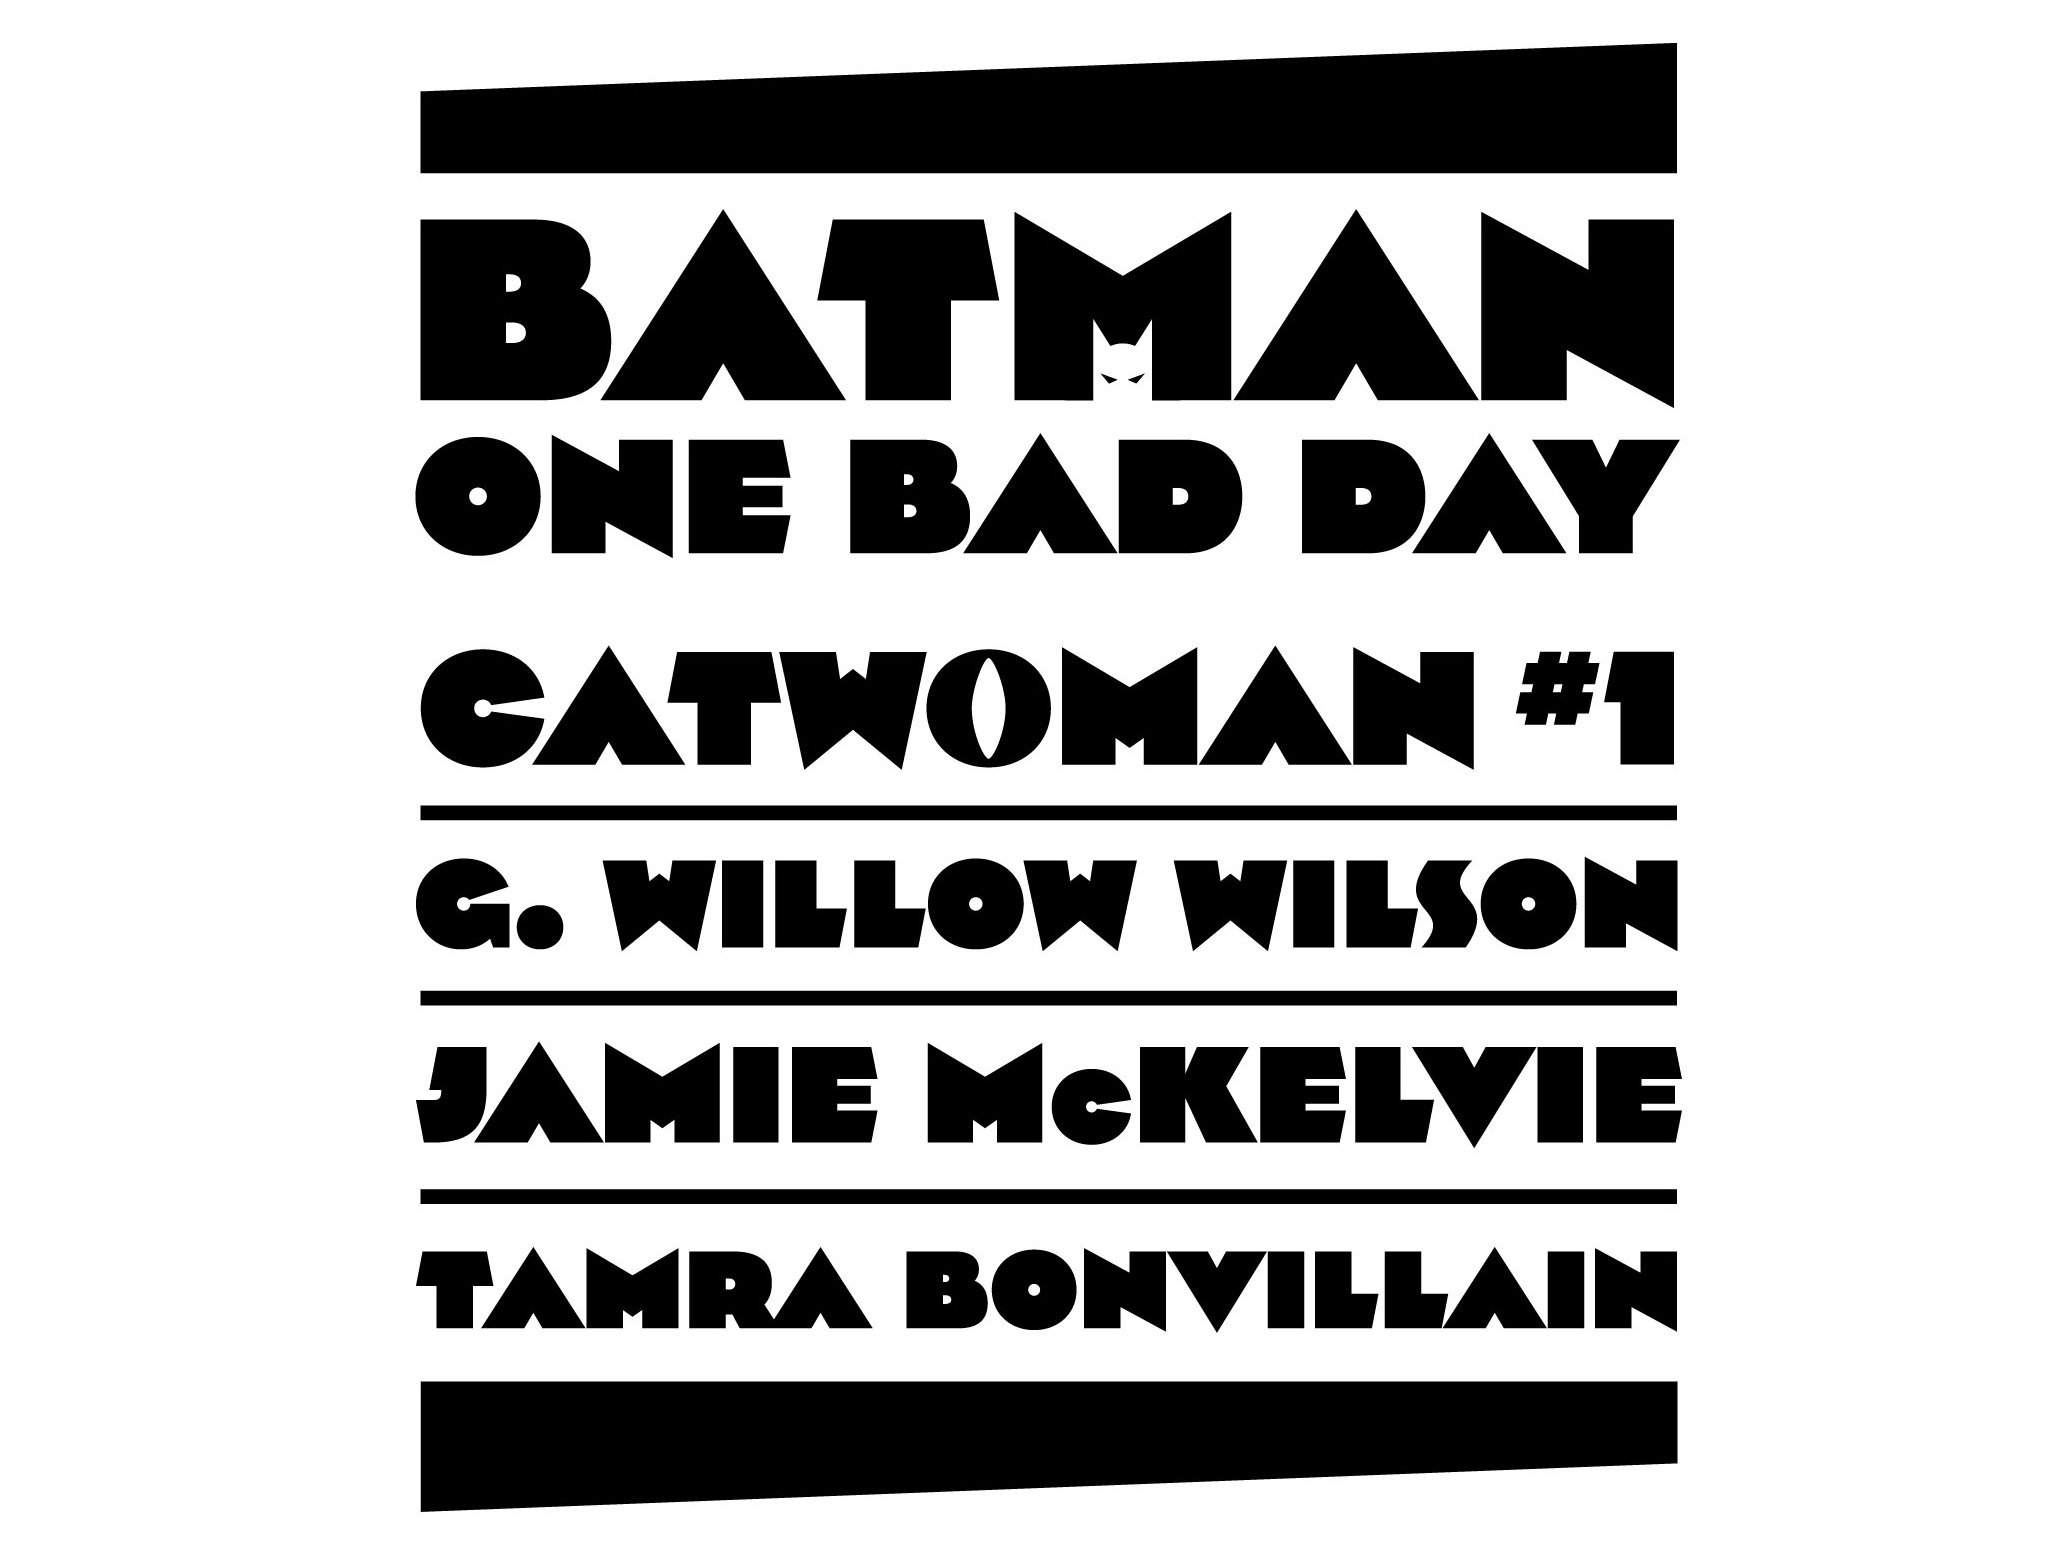 Batman - One Bad Day: Catwoman by G. Willow Wilson, Jamie McKelvie & Tamra Bonvillain